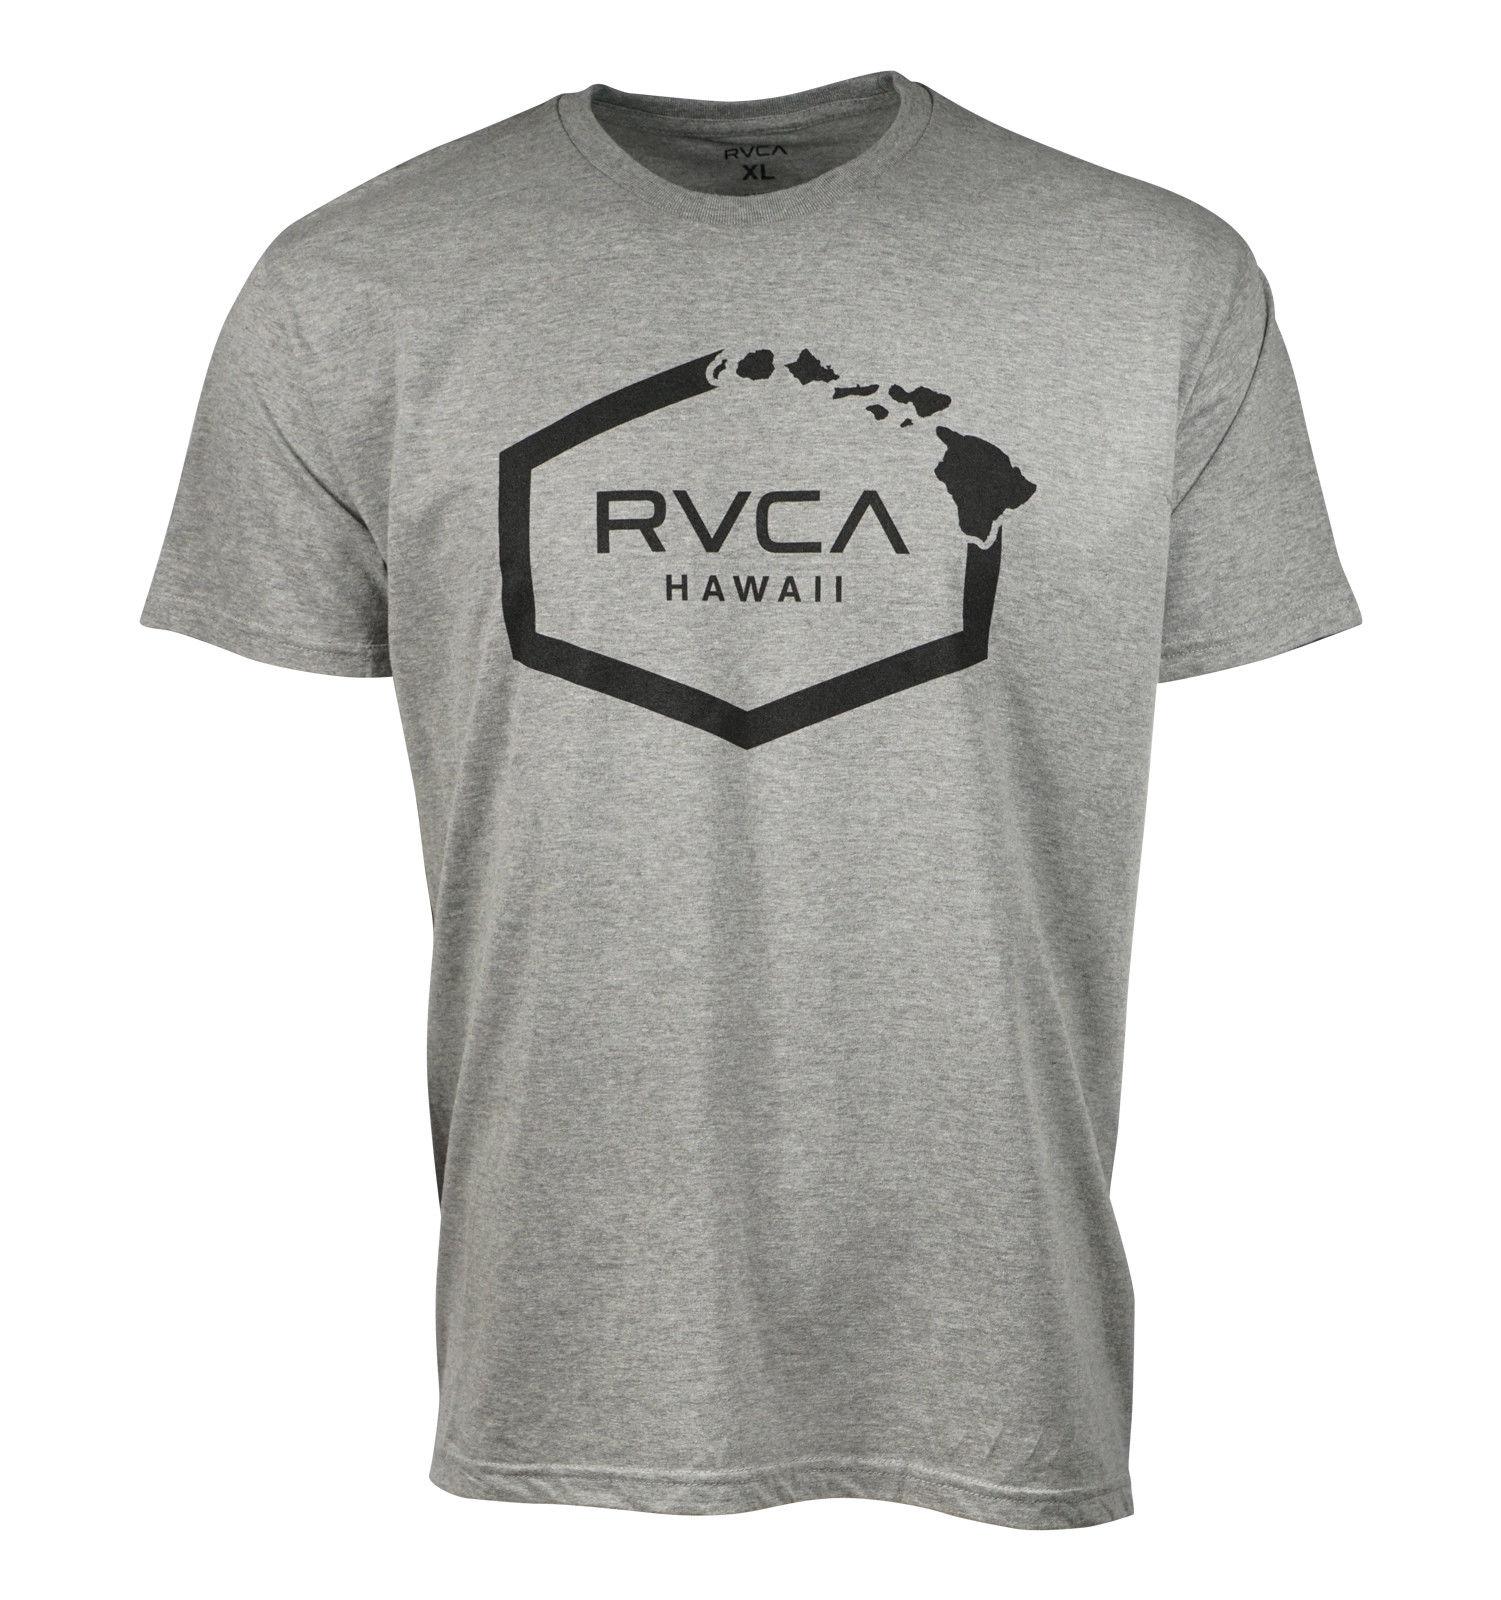 RVCA Hawaii Logo - RVCA MENS HAWAII LOGO T SHIRT The New Short Sleeve, T Shirt Funny